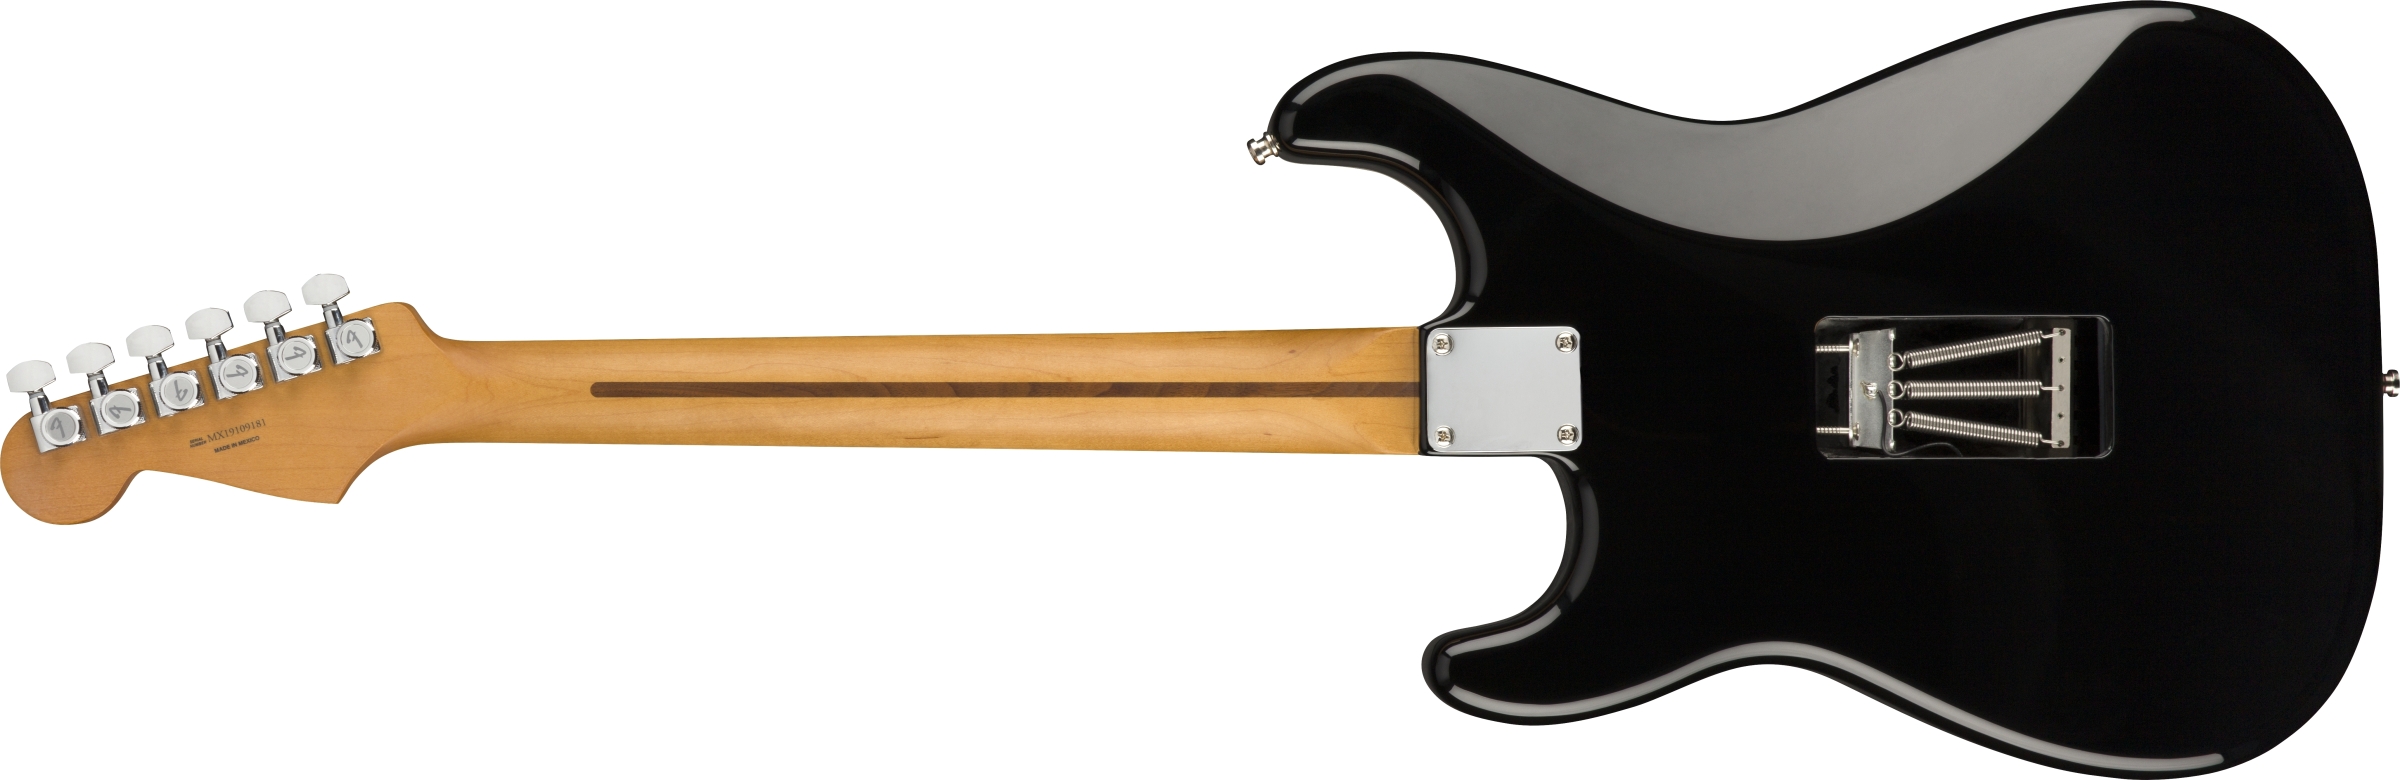 Tom Morello Stratocaster背面画像